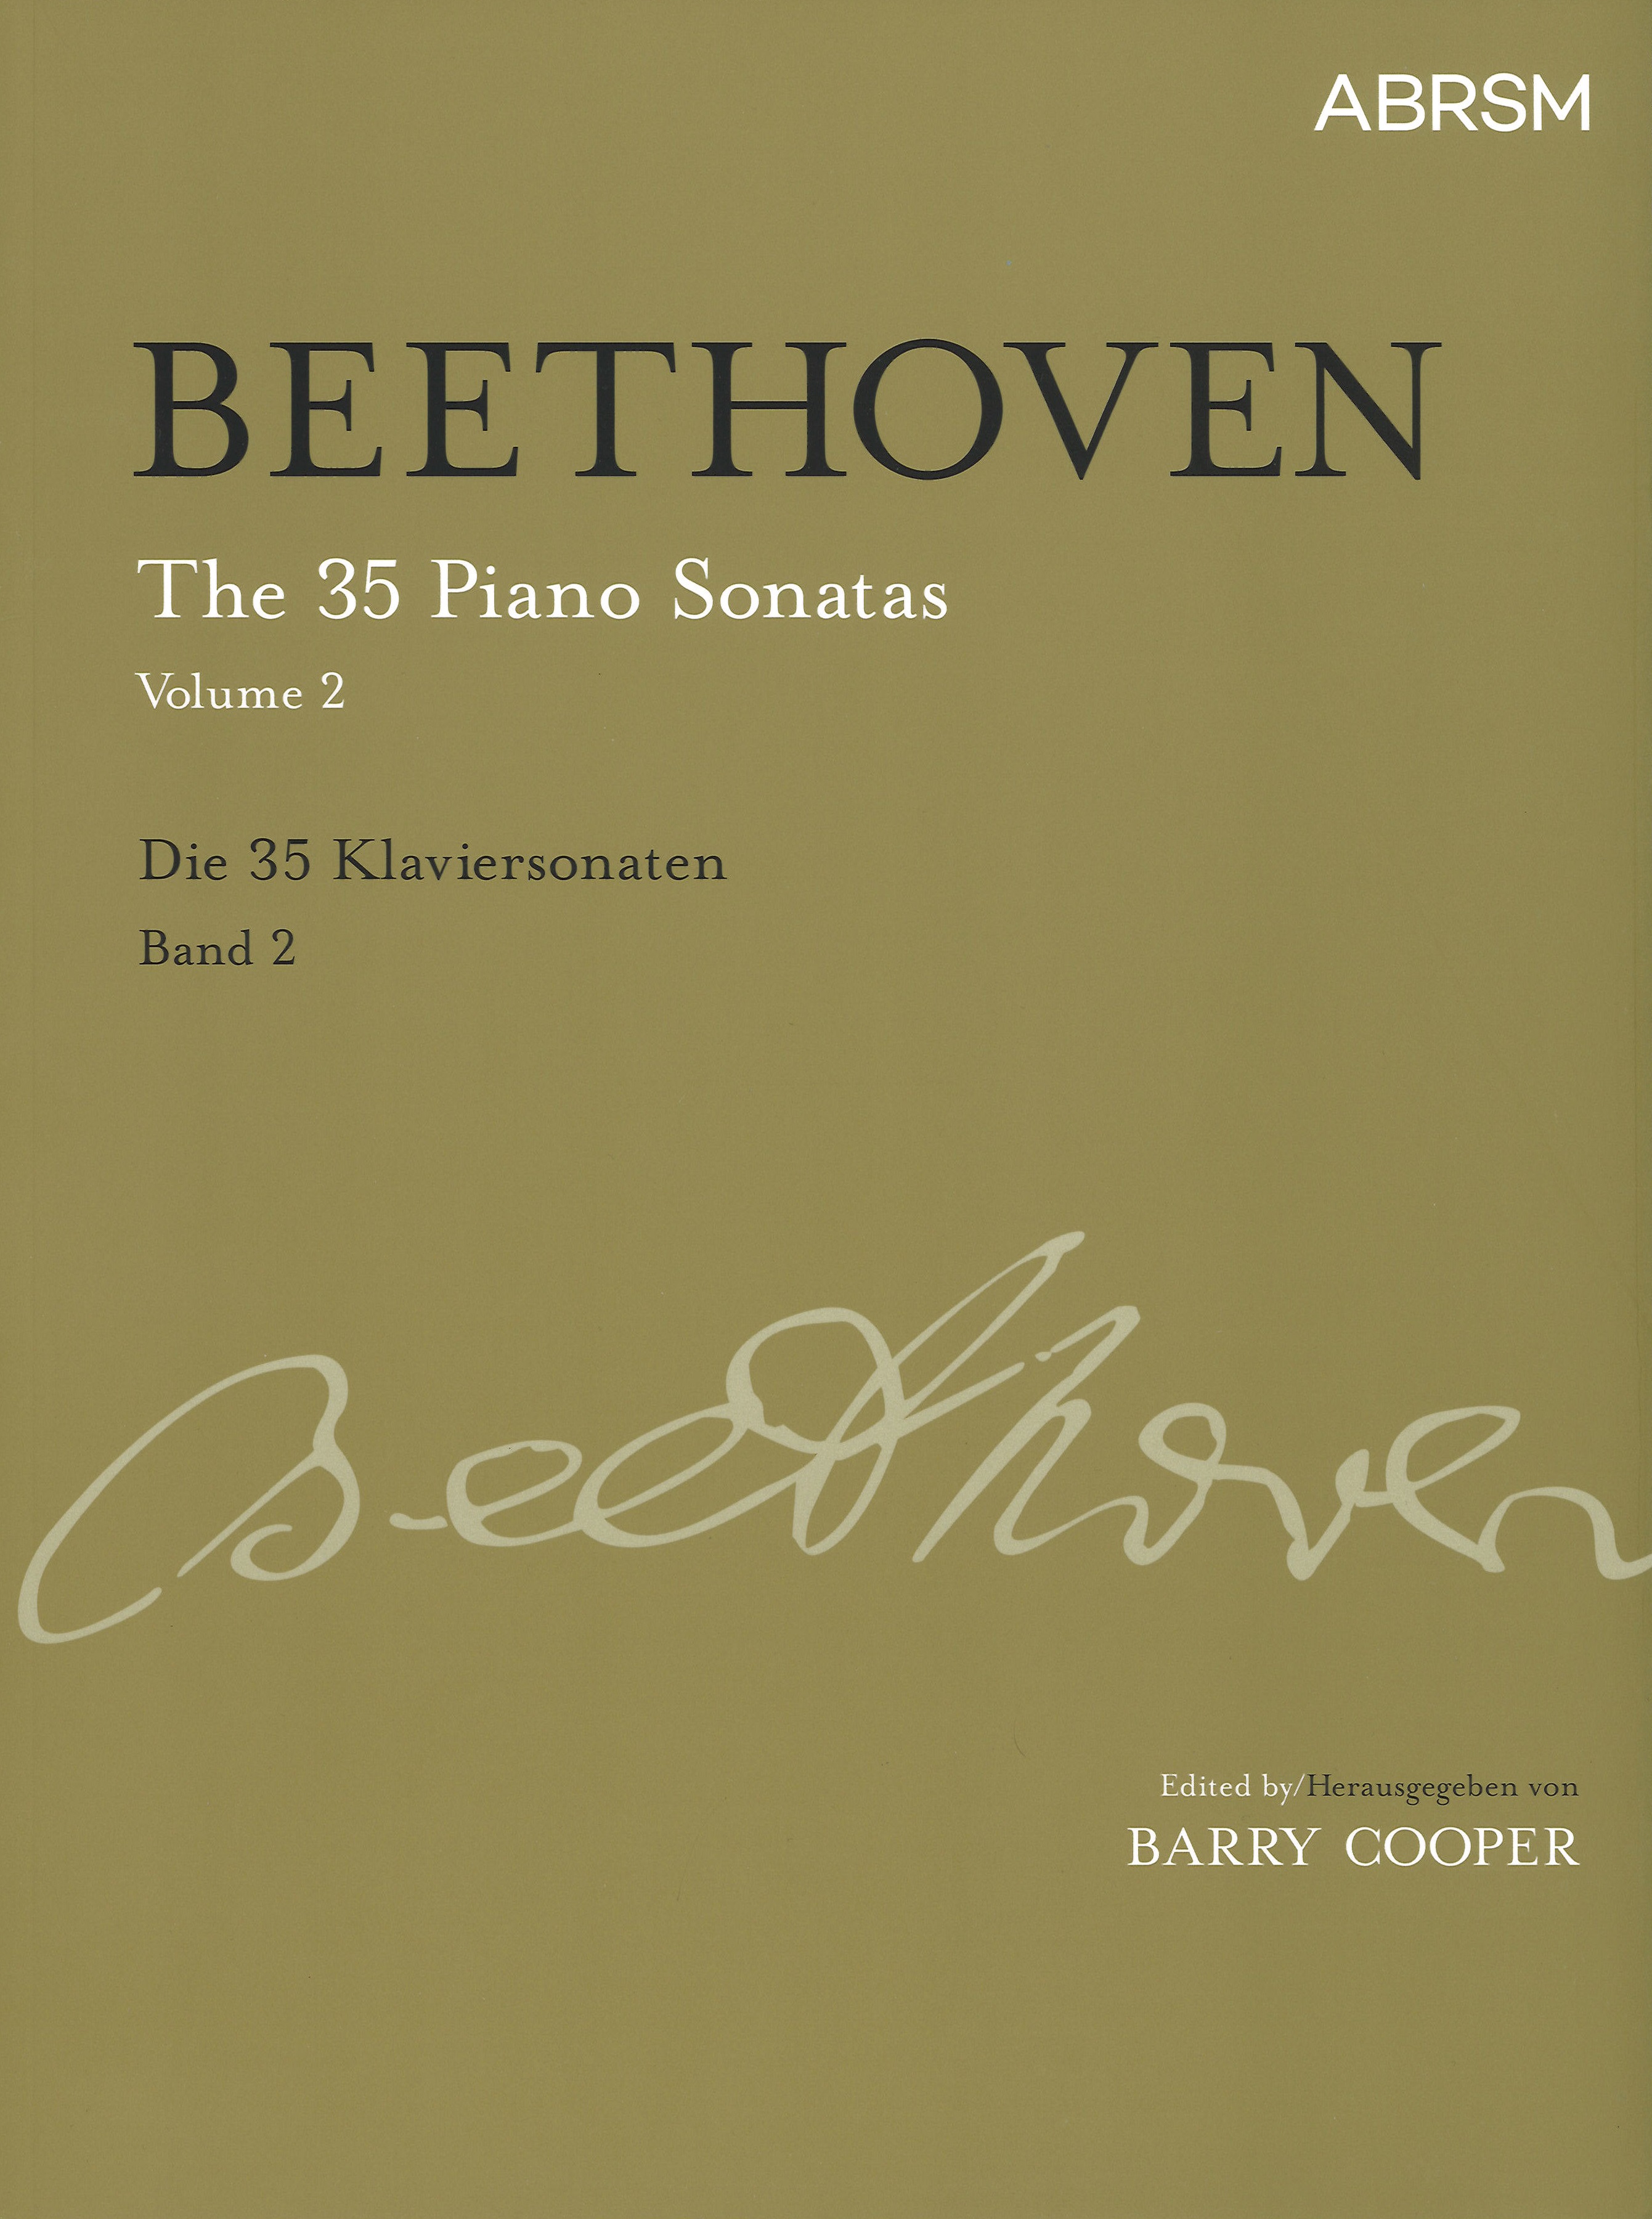 Beethoven Piano Sonatas (35) Vol 2 Cooper Sheet Music Songbook